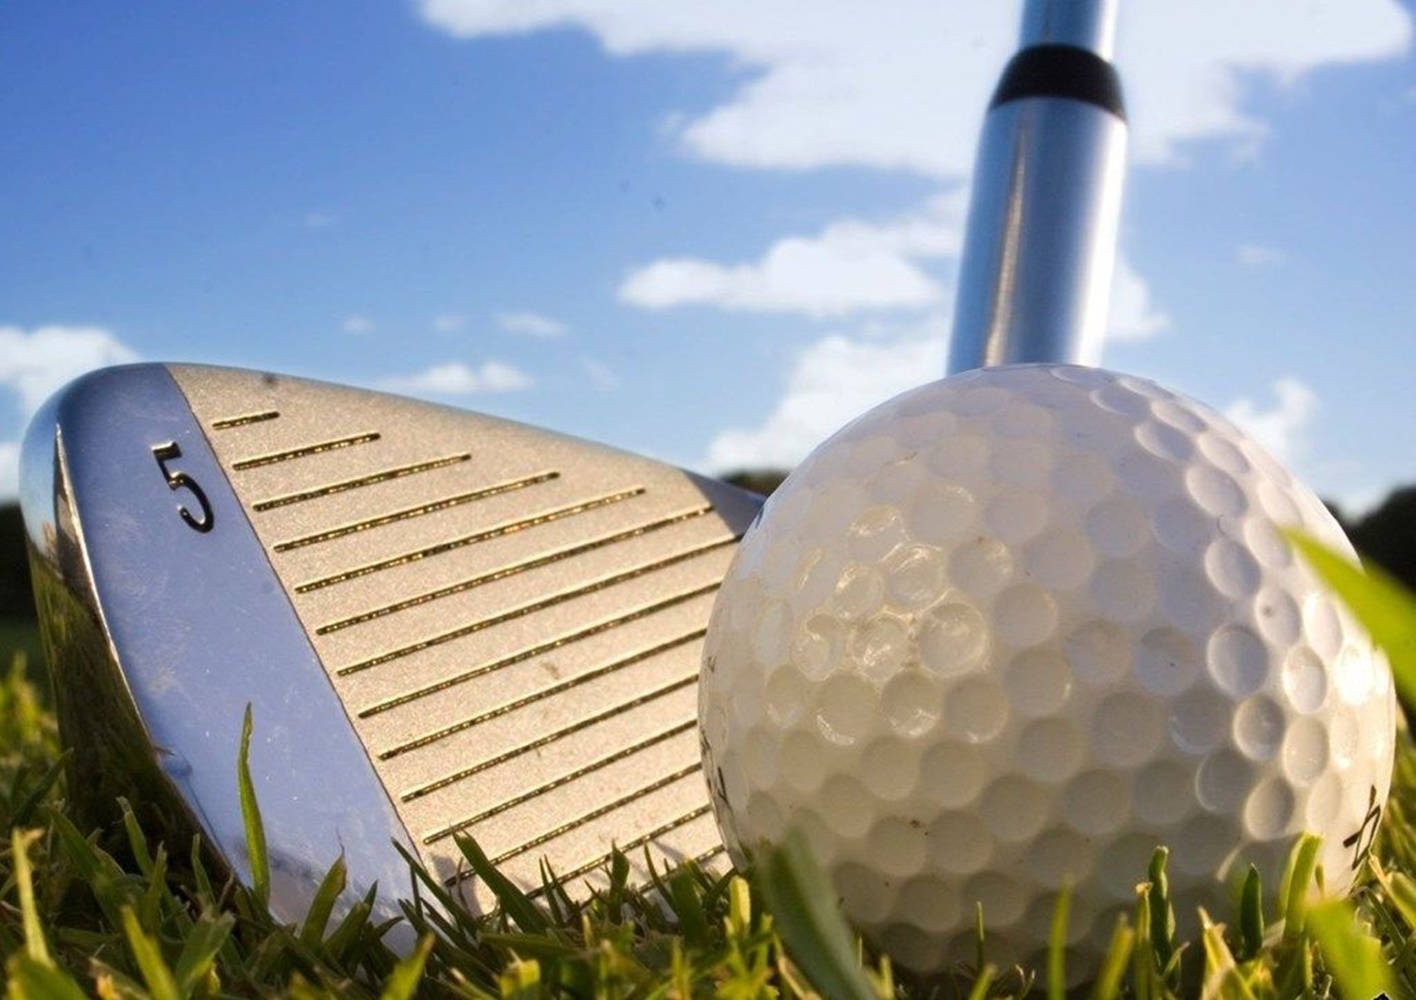 Cool Golf Stick And Ball Close Up Shot